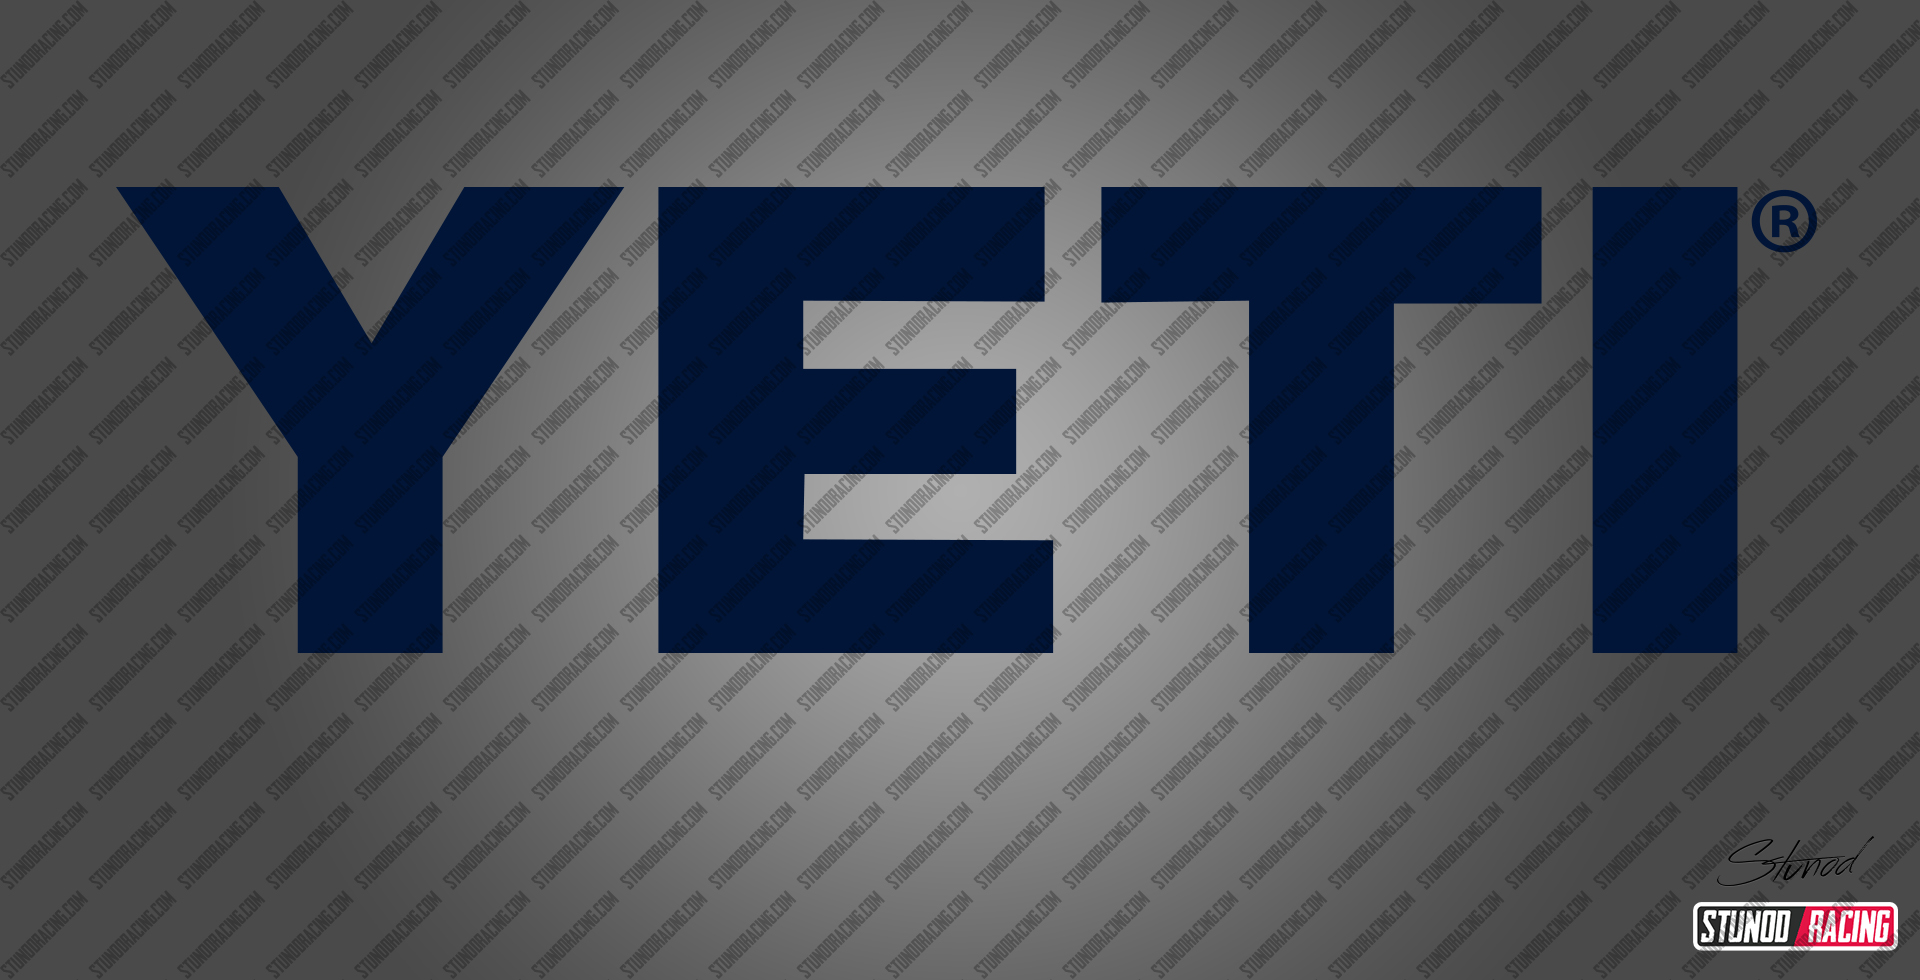 StunodRacing-YETI-Logo.jpg